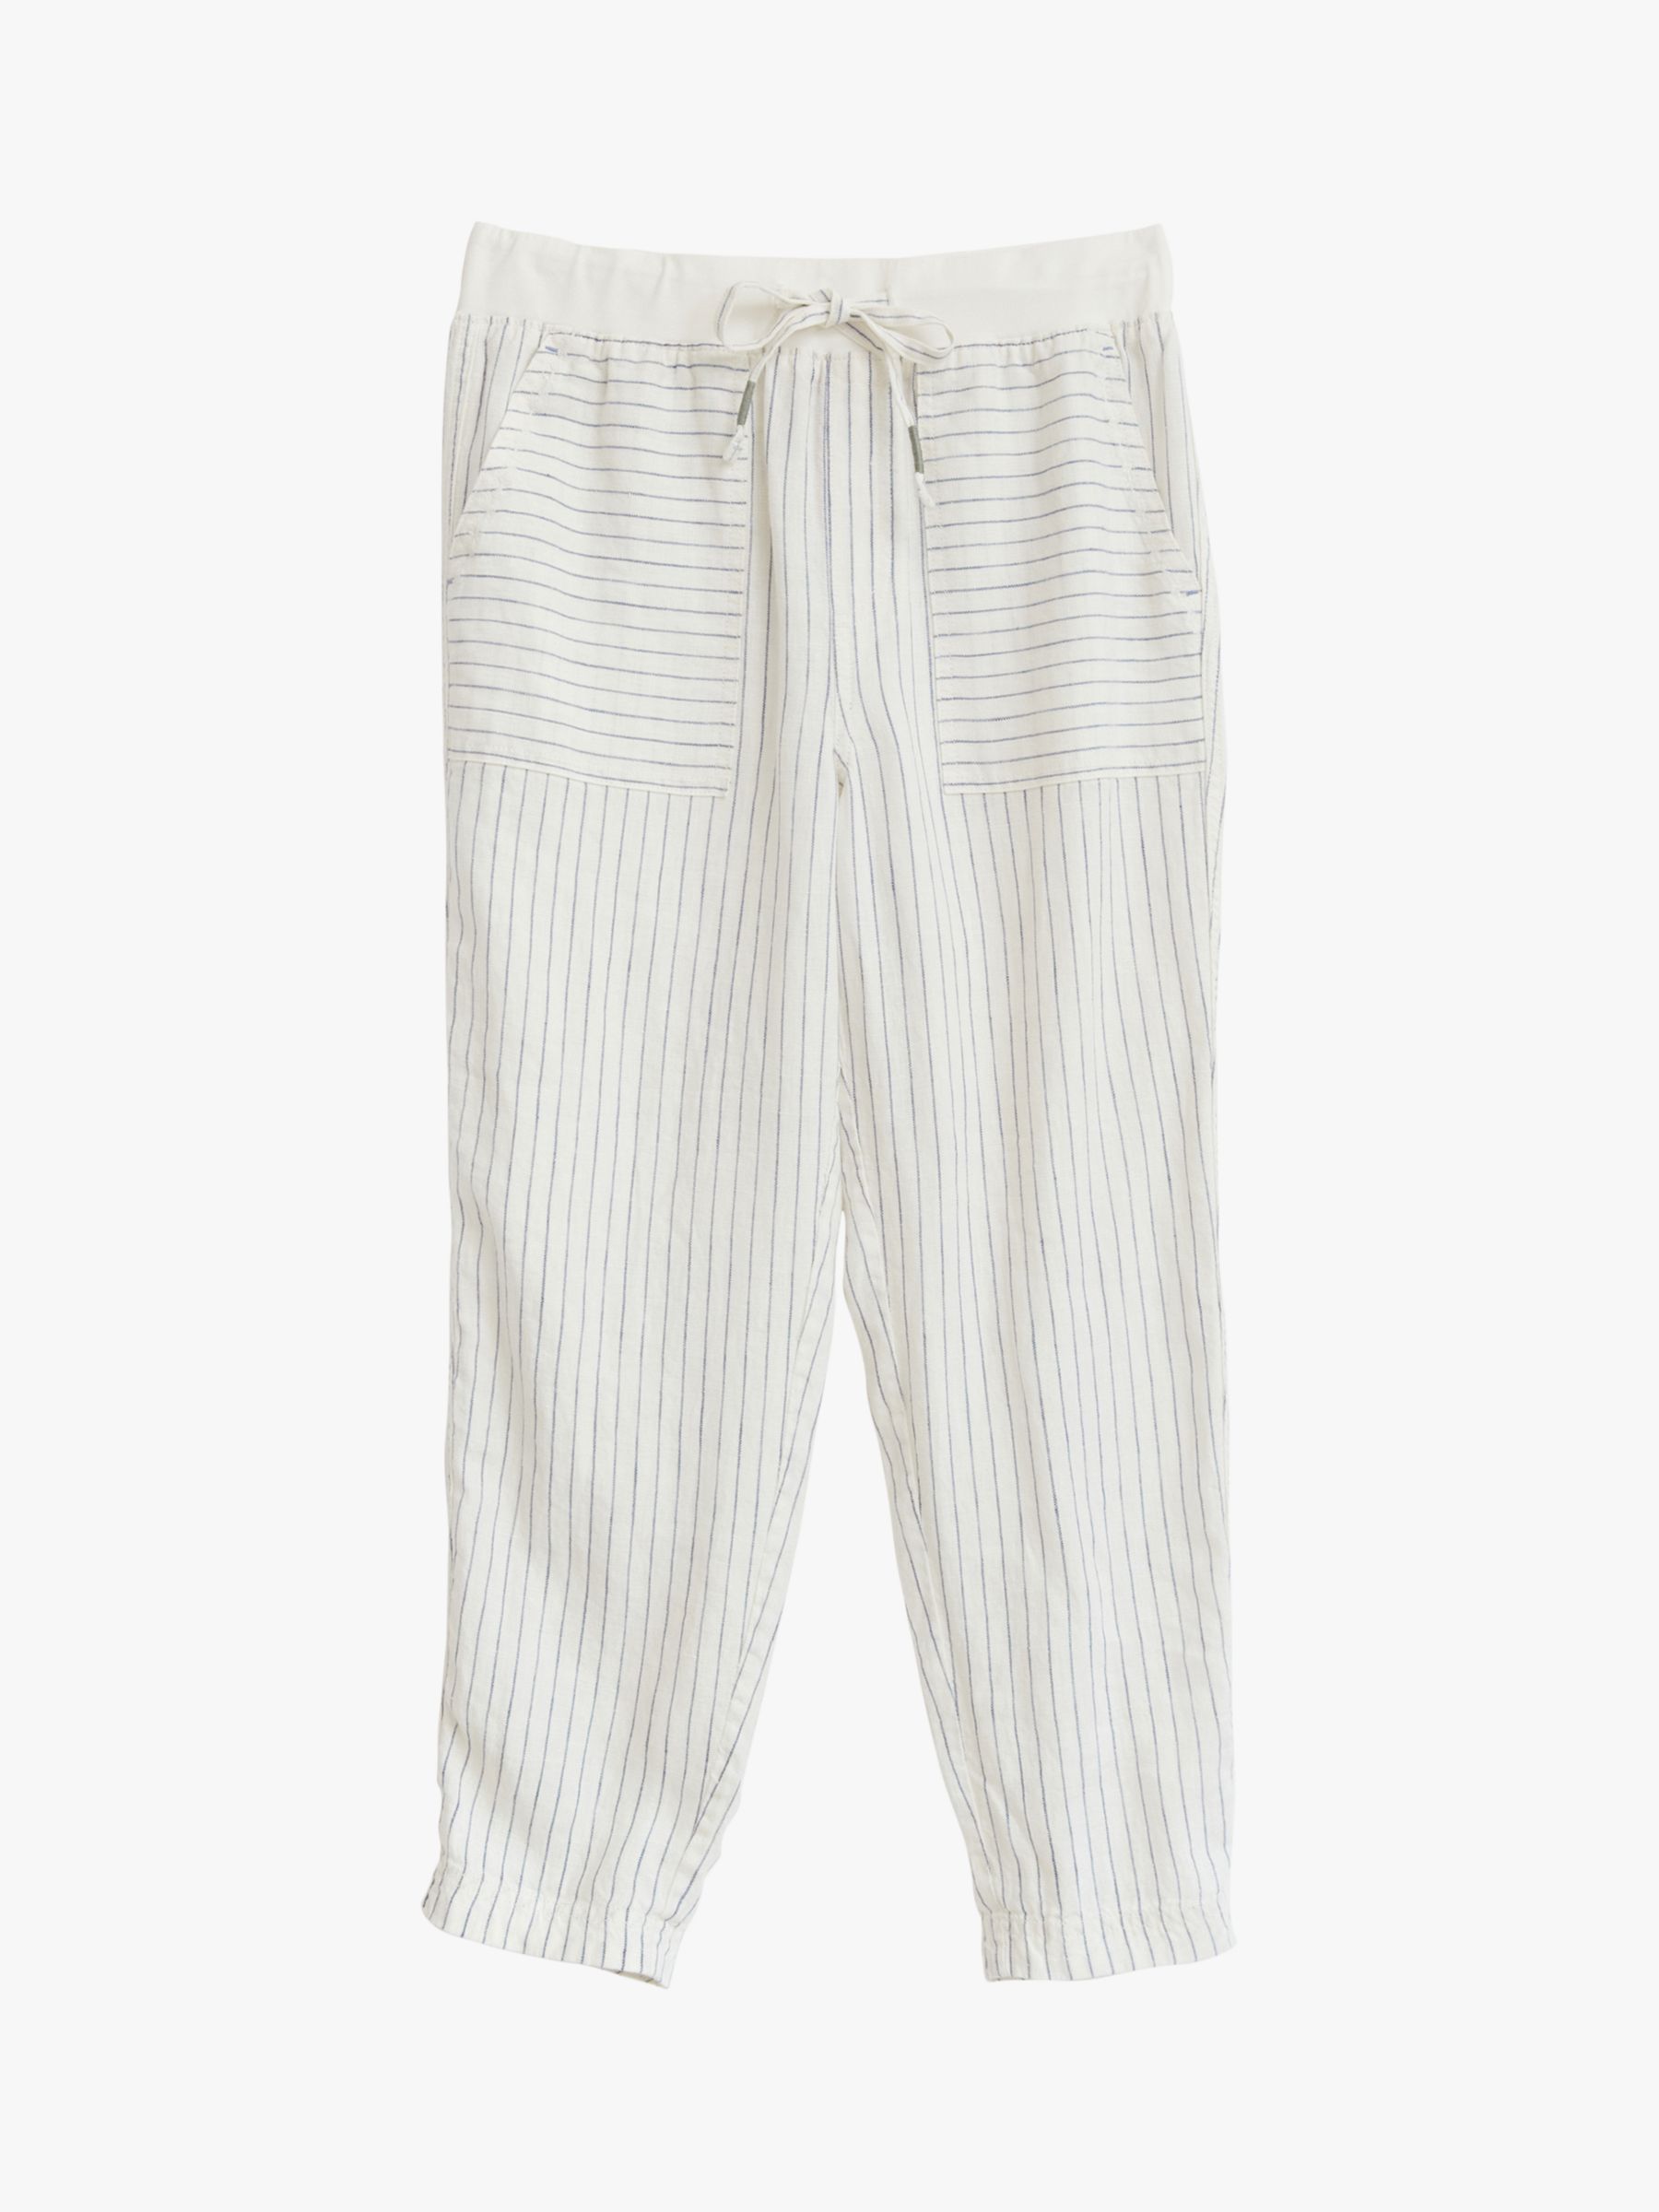 White Stuff Effie Striped Linen Trousers, Ivory/Multi, 8